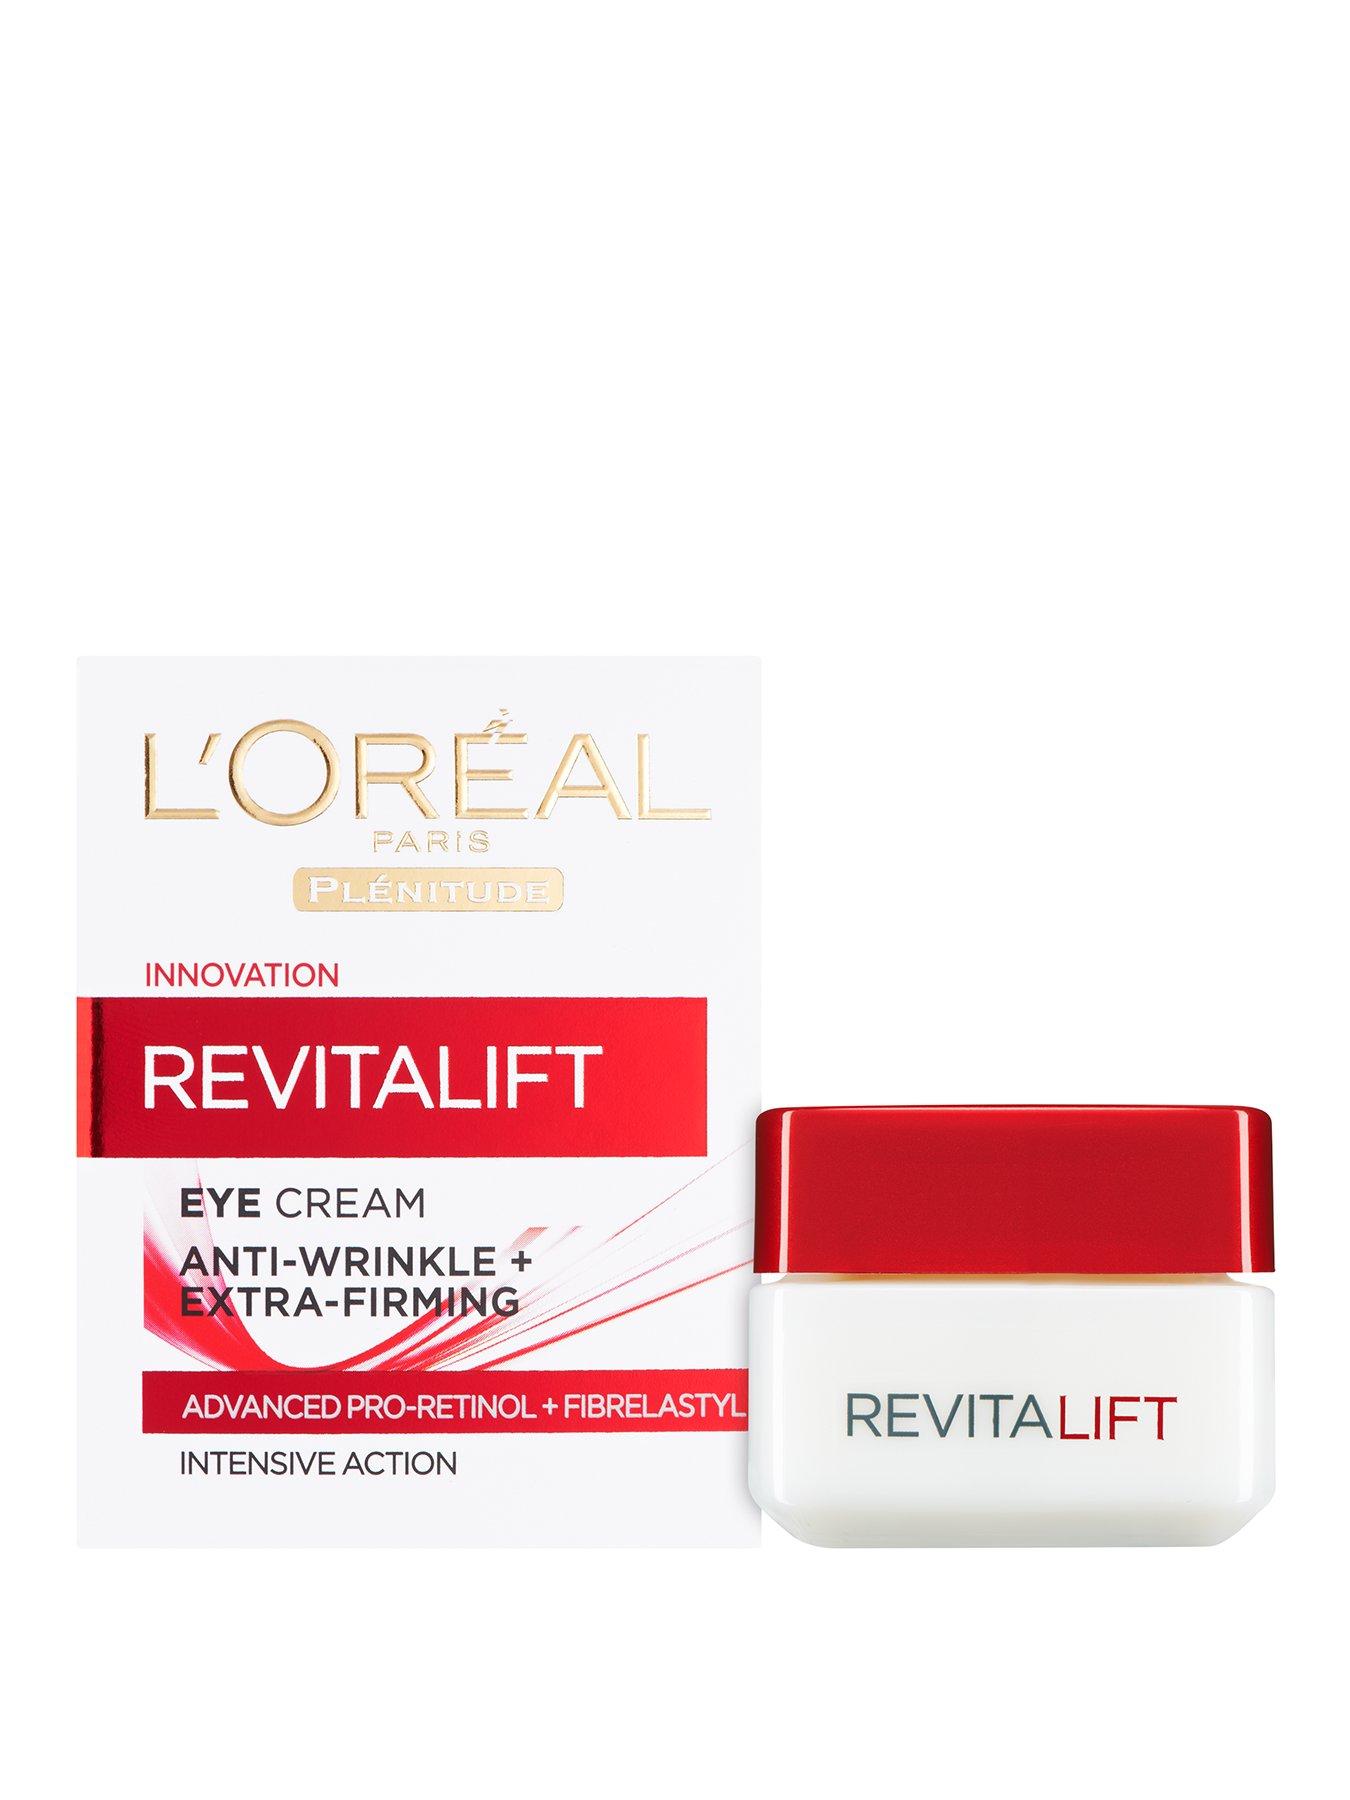 L'Oreal Paris Revitalift Anti-Wrinkle + Firming Eye Cream